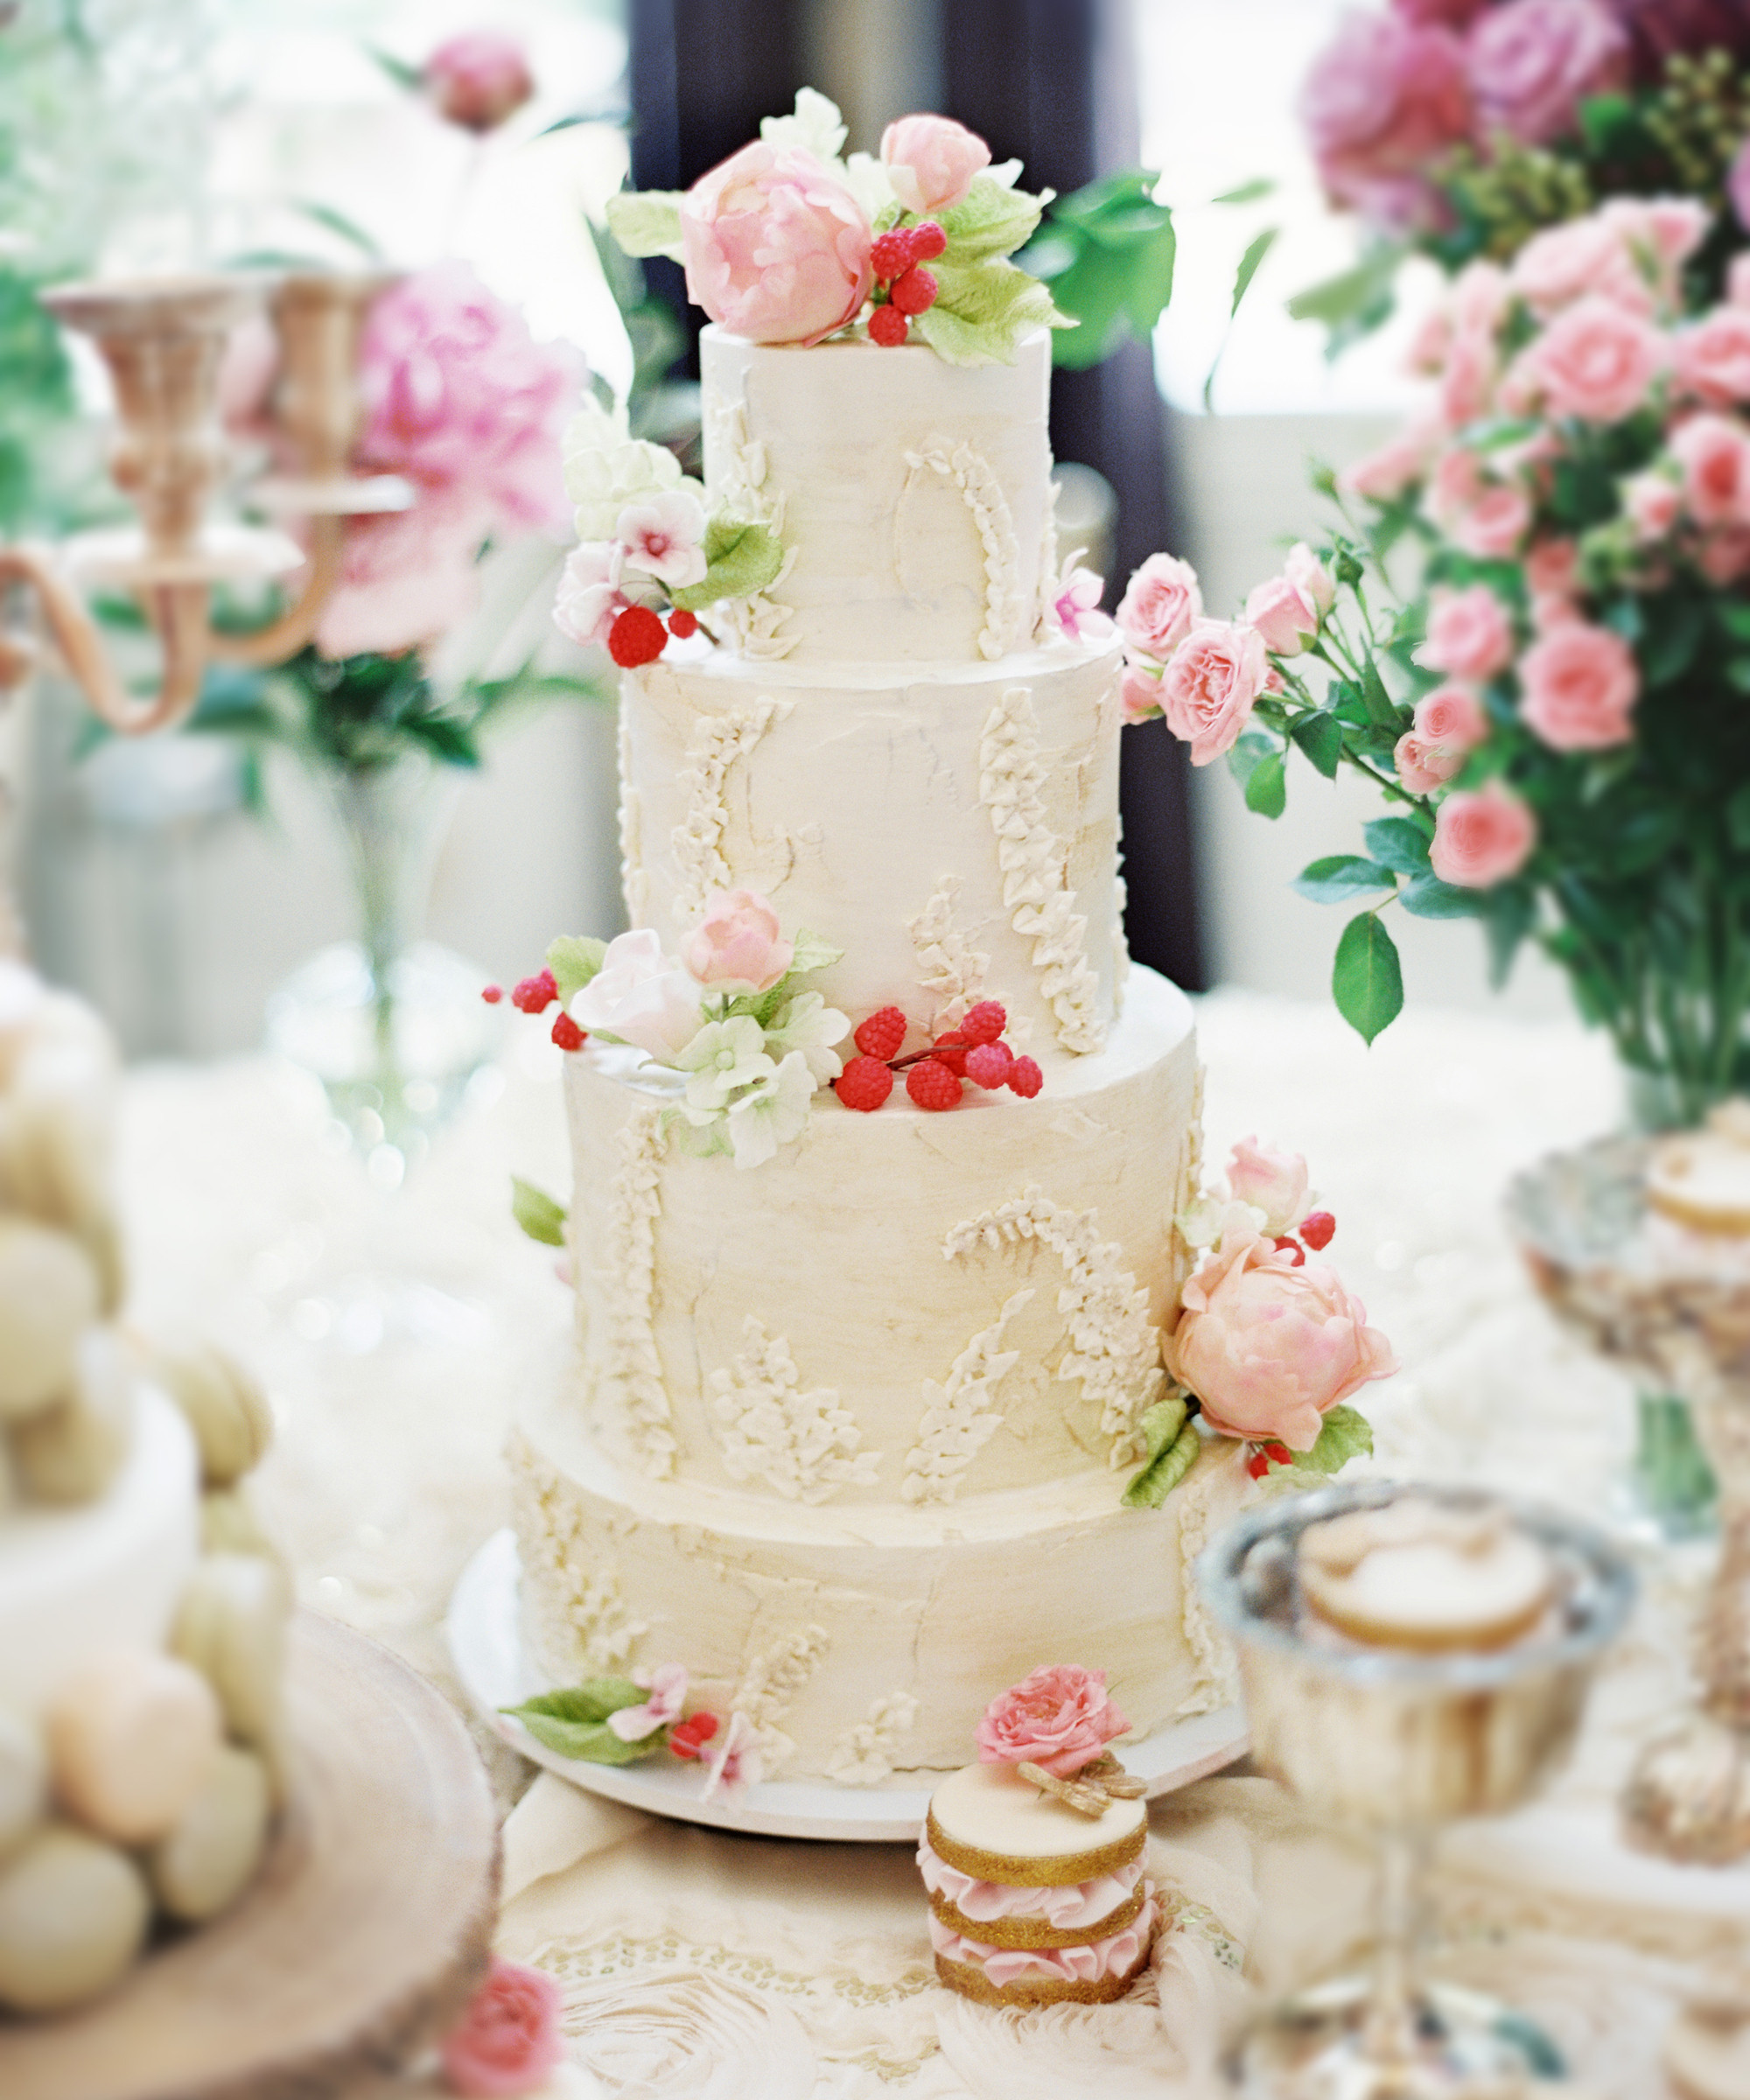 Picture Of Wedding Cakes
 Vegan and Gluten Free Wedding Cake Ideas Alternative